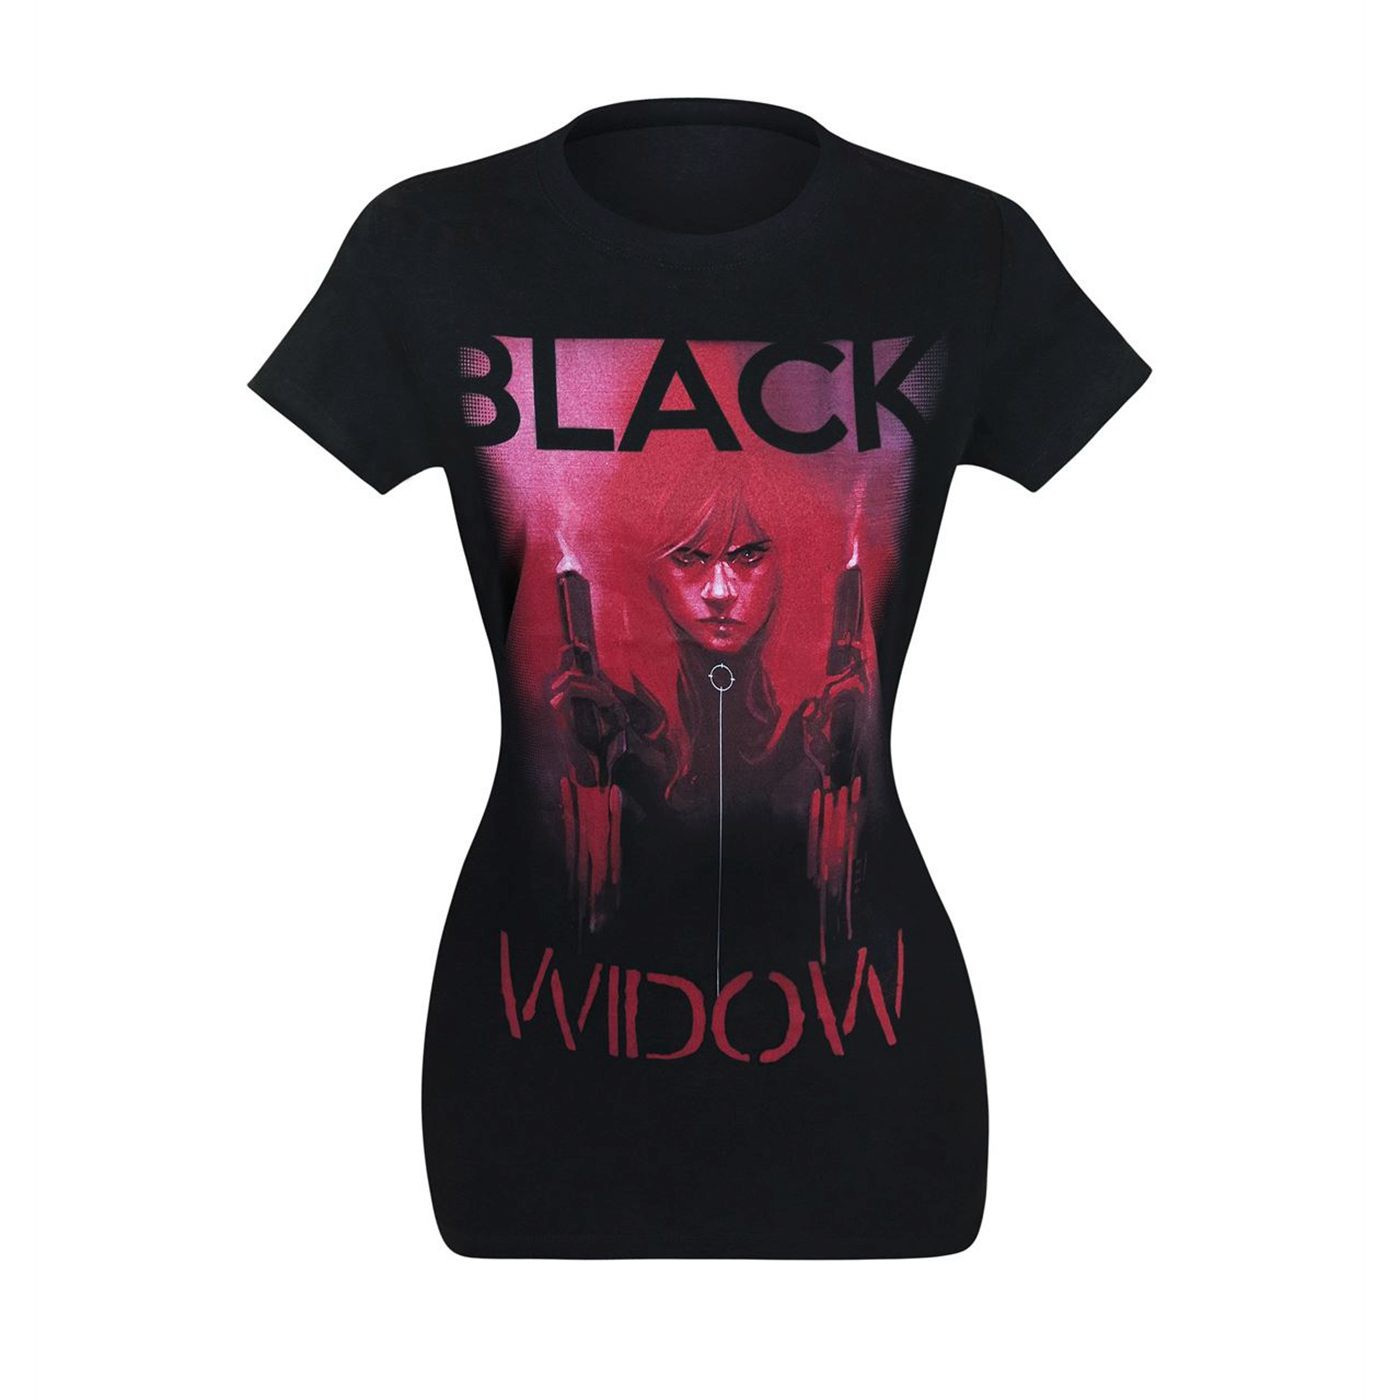 Black Widow Fierce Women's T-Shirt